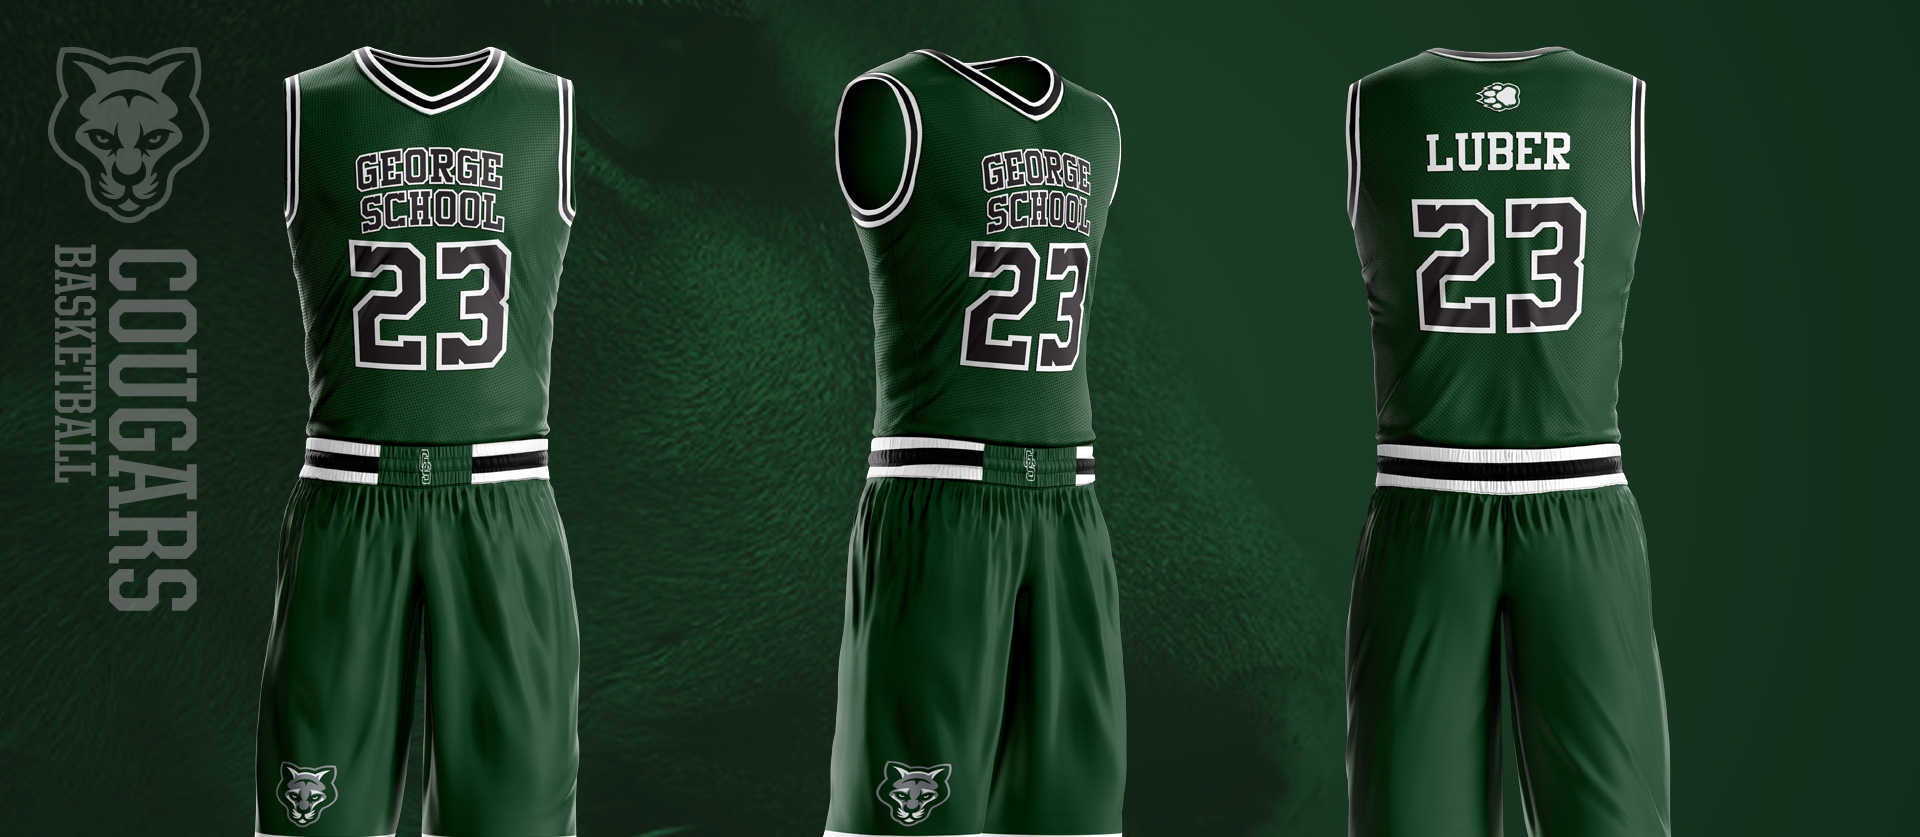 The George School - Basketball Uniform Green